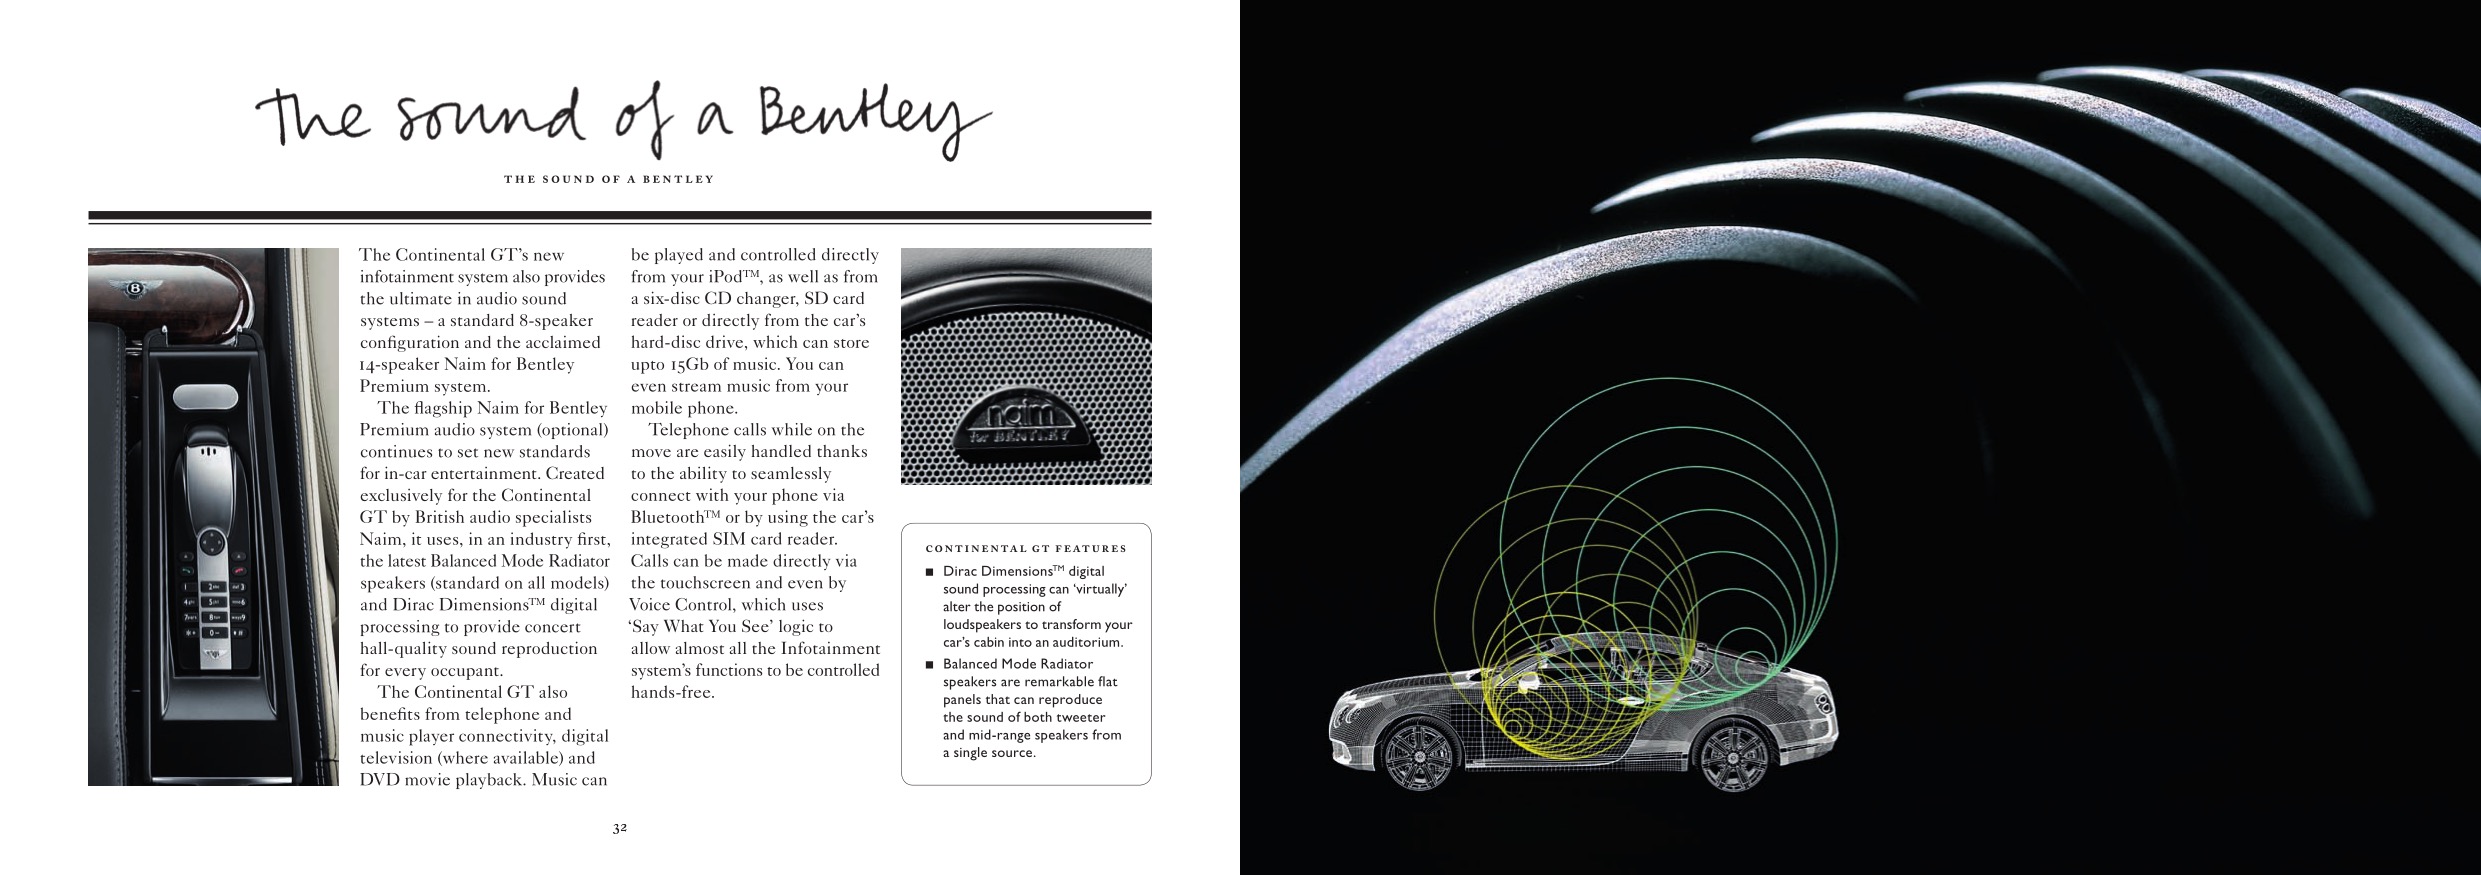 2011 Bentley Continental GT Brochure Page 11